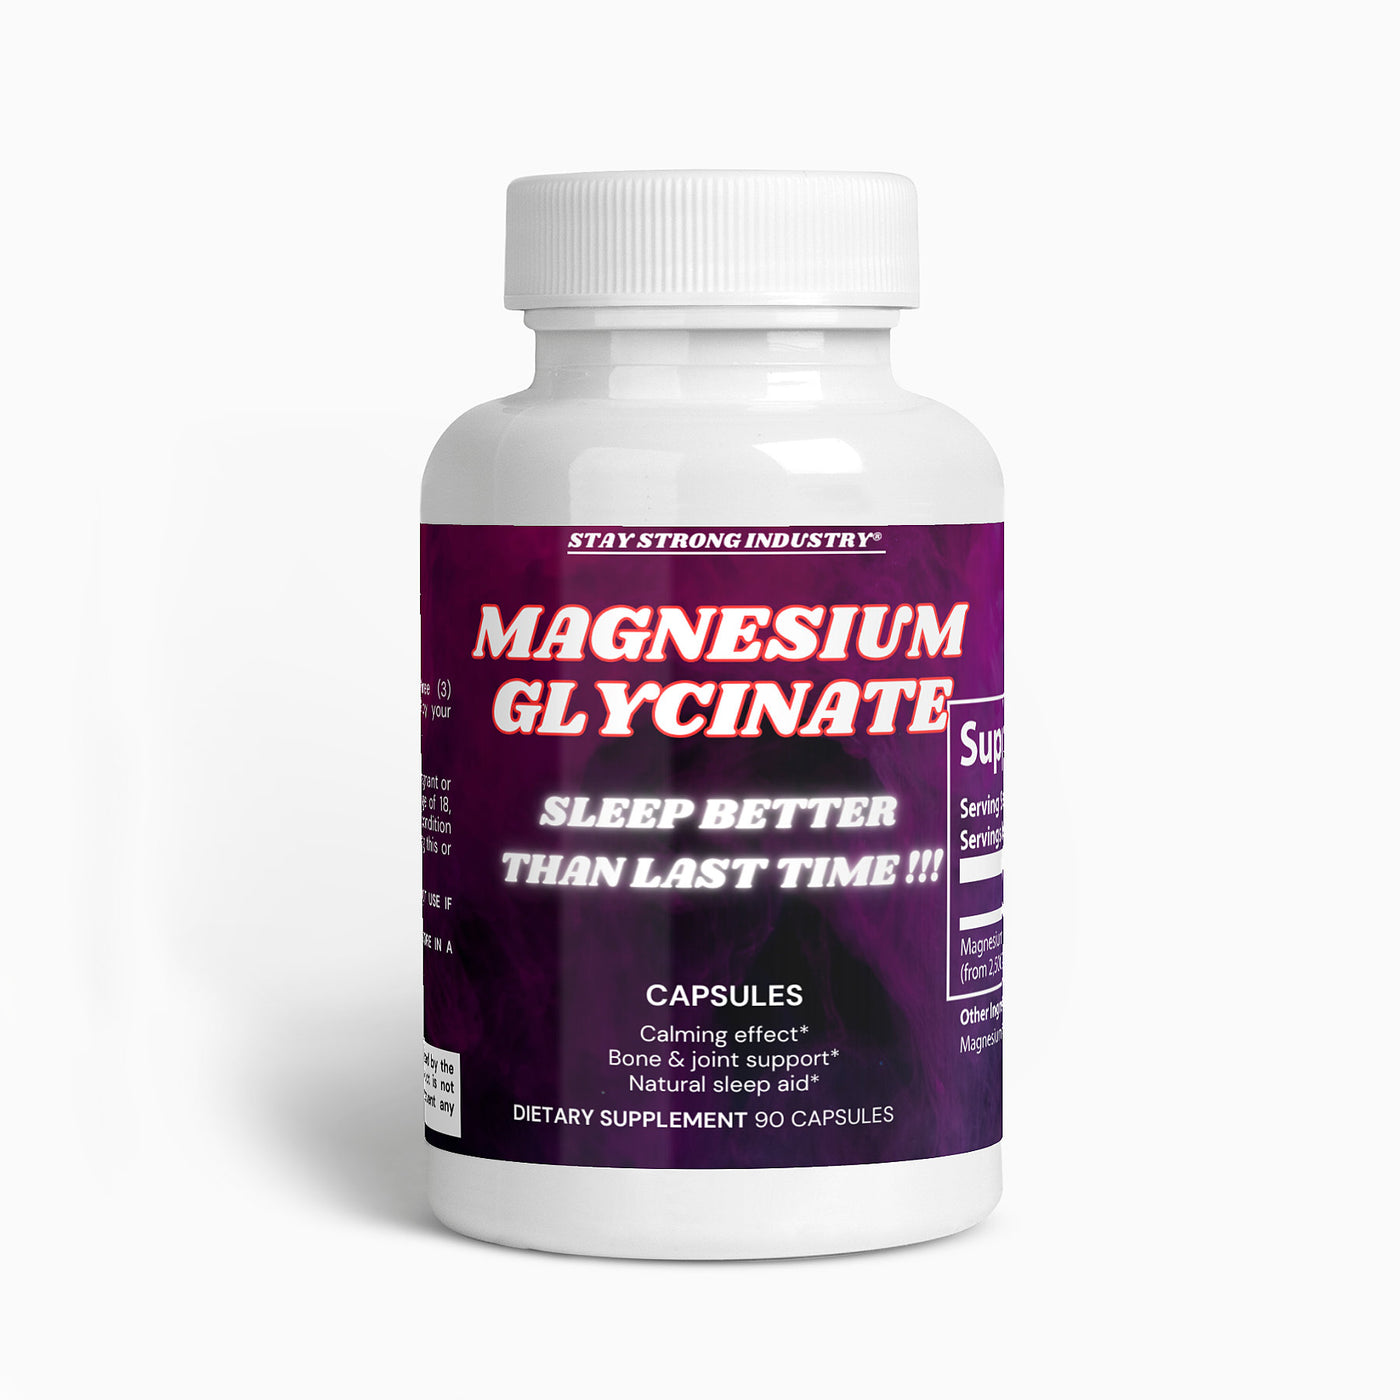 Magnesium Glycinate "SLEEP BETTER THAN LAST TIME "